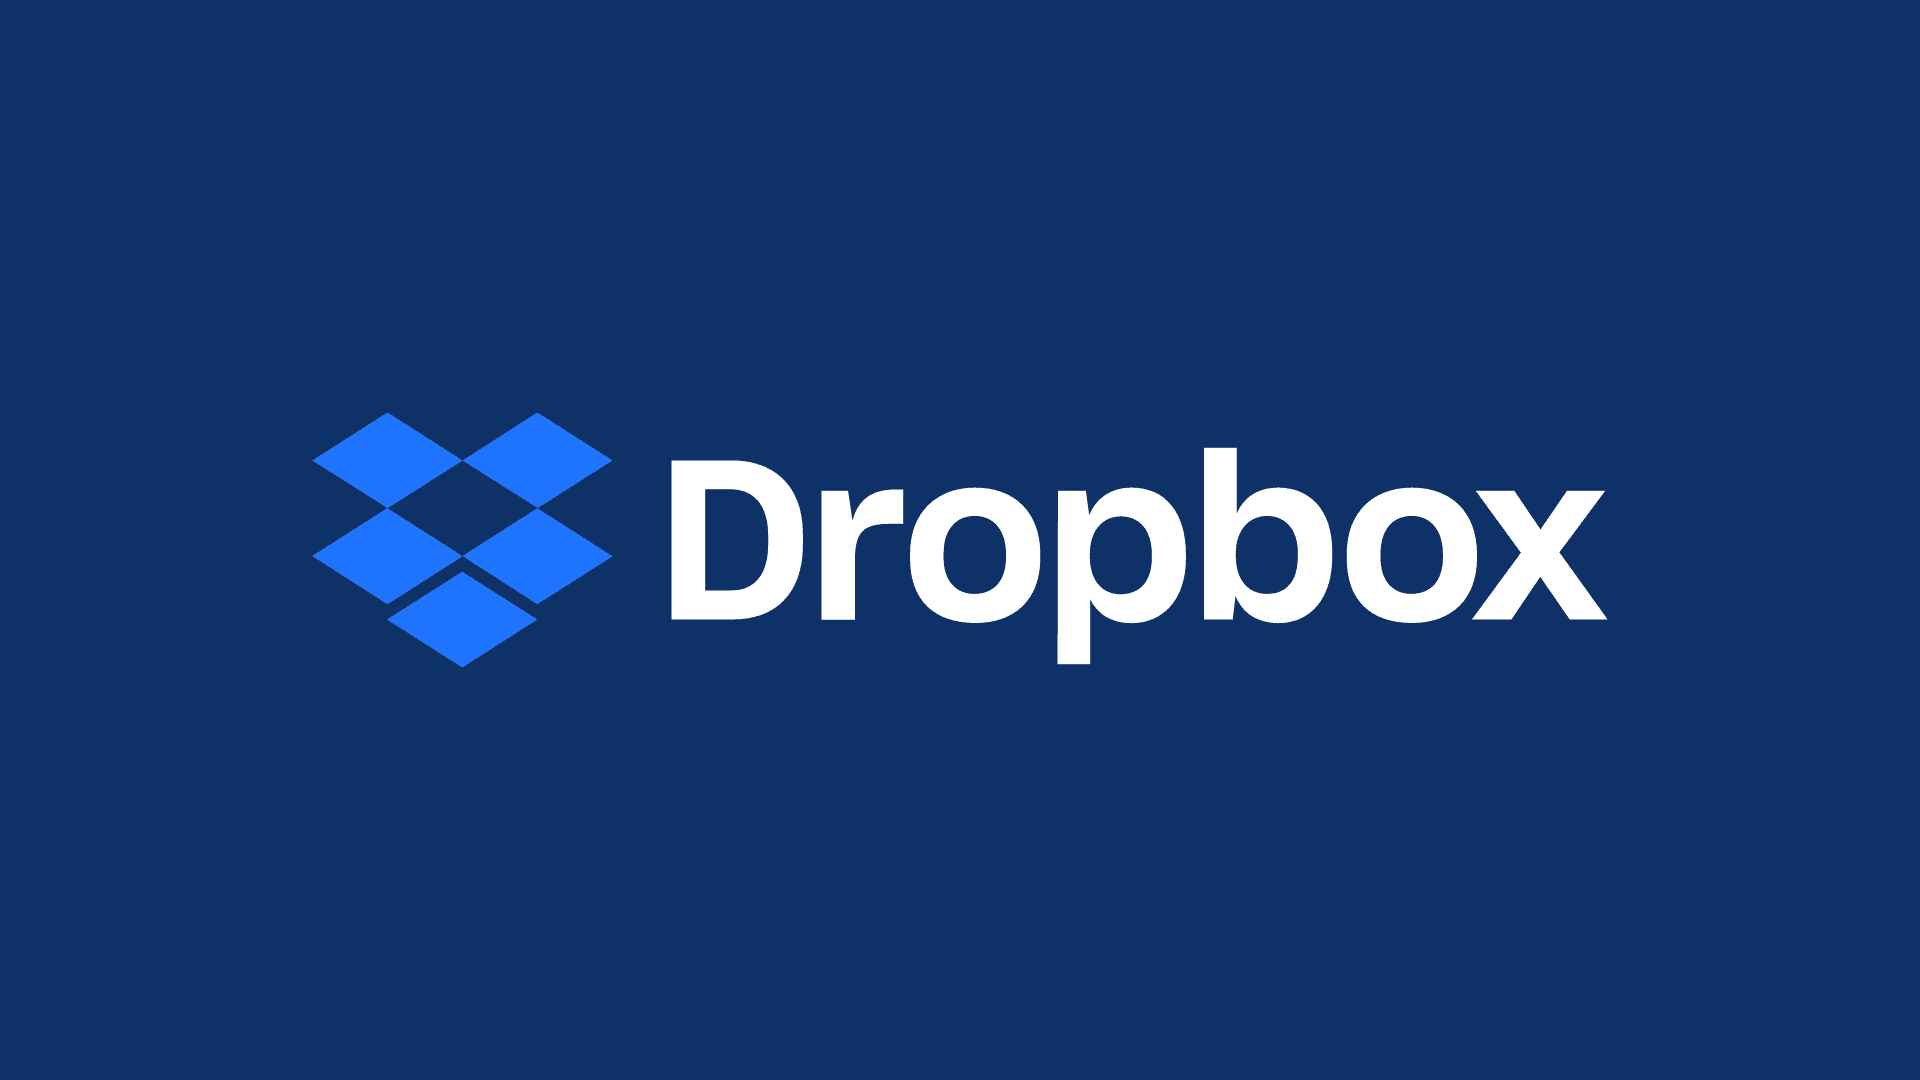 Dropbox logo on dark blue solid background